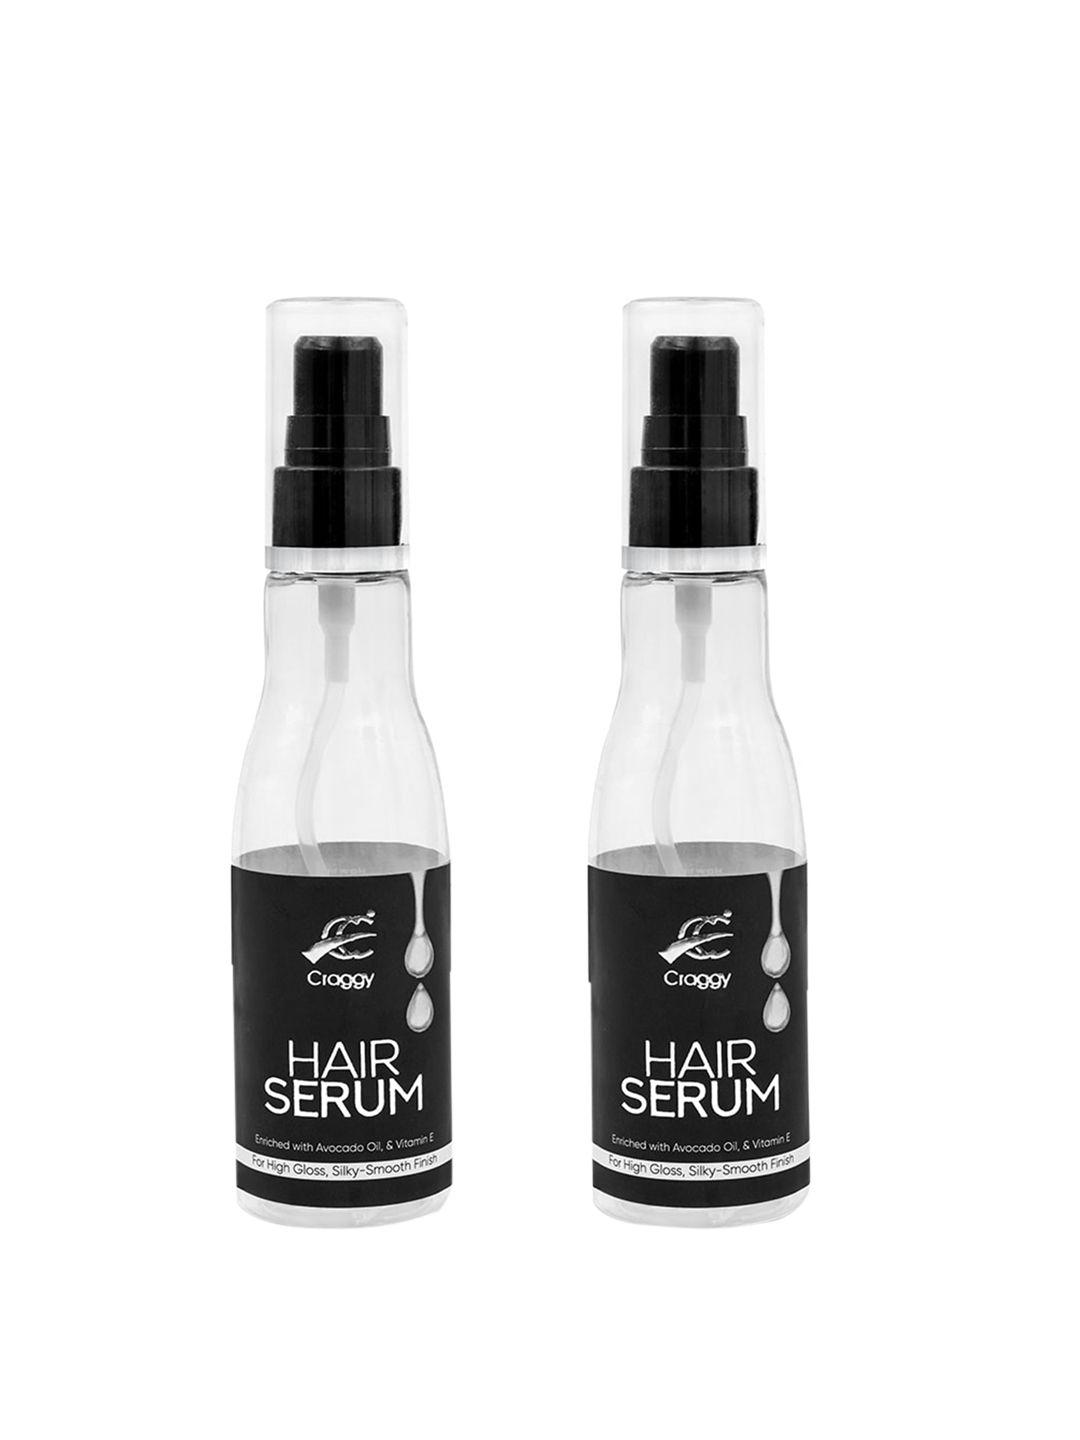 craggy cosmetic set of 2 hair serum with vitamin e & avocado oil - 100 ml each